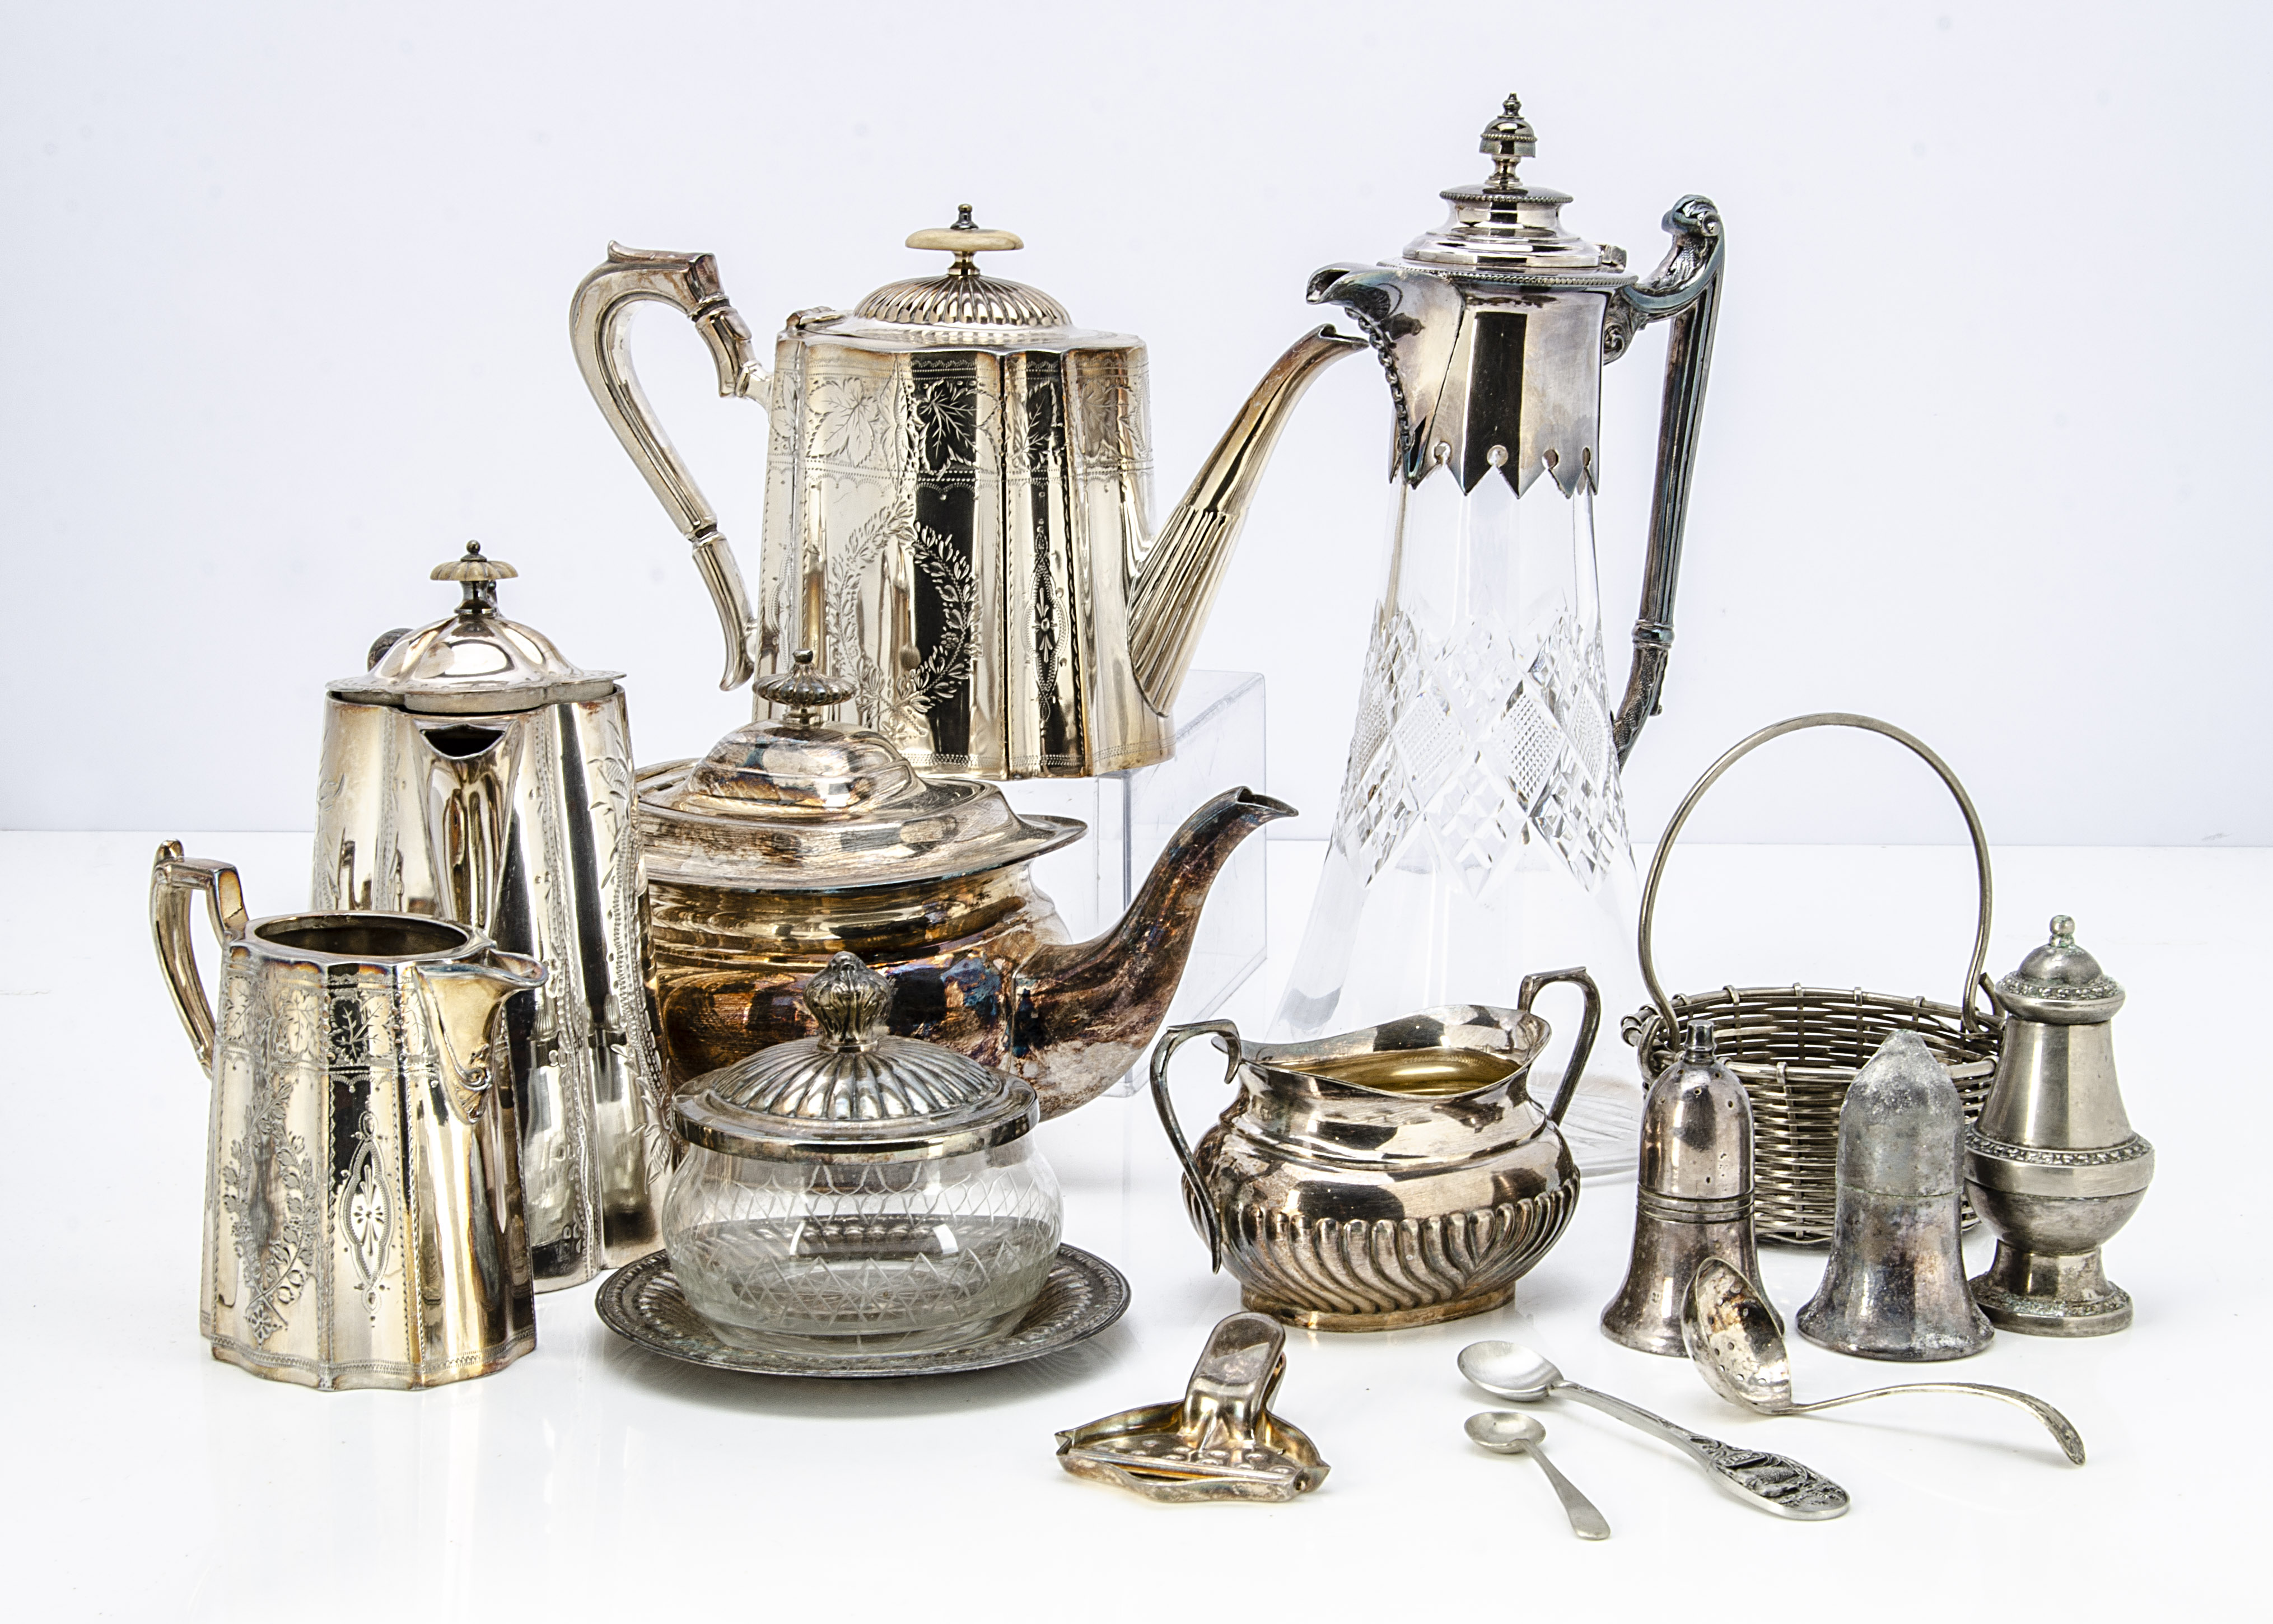 A collection of silver plate, including a cut glass claret jug, four piece tea set, a teapot, butter